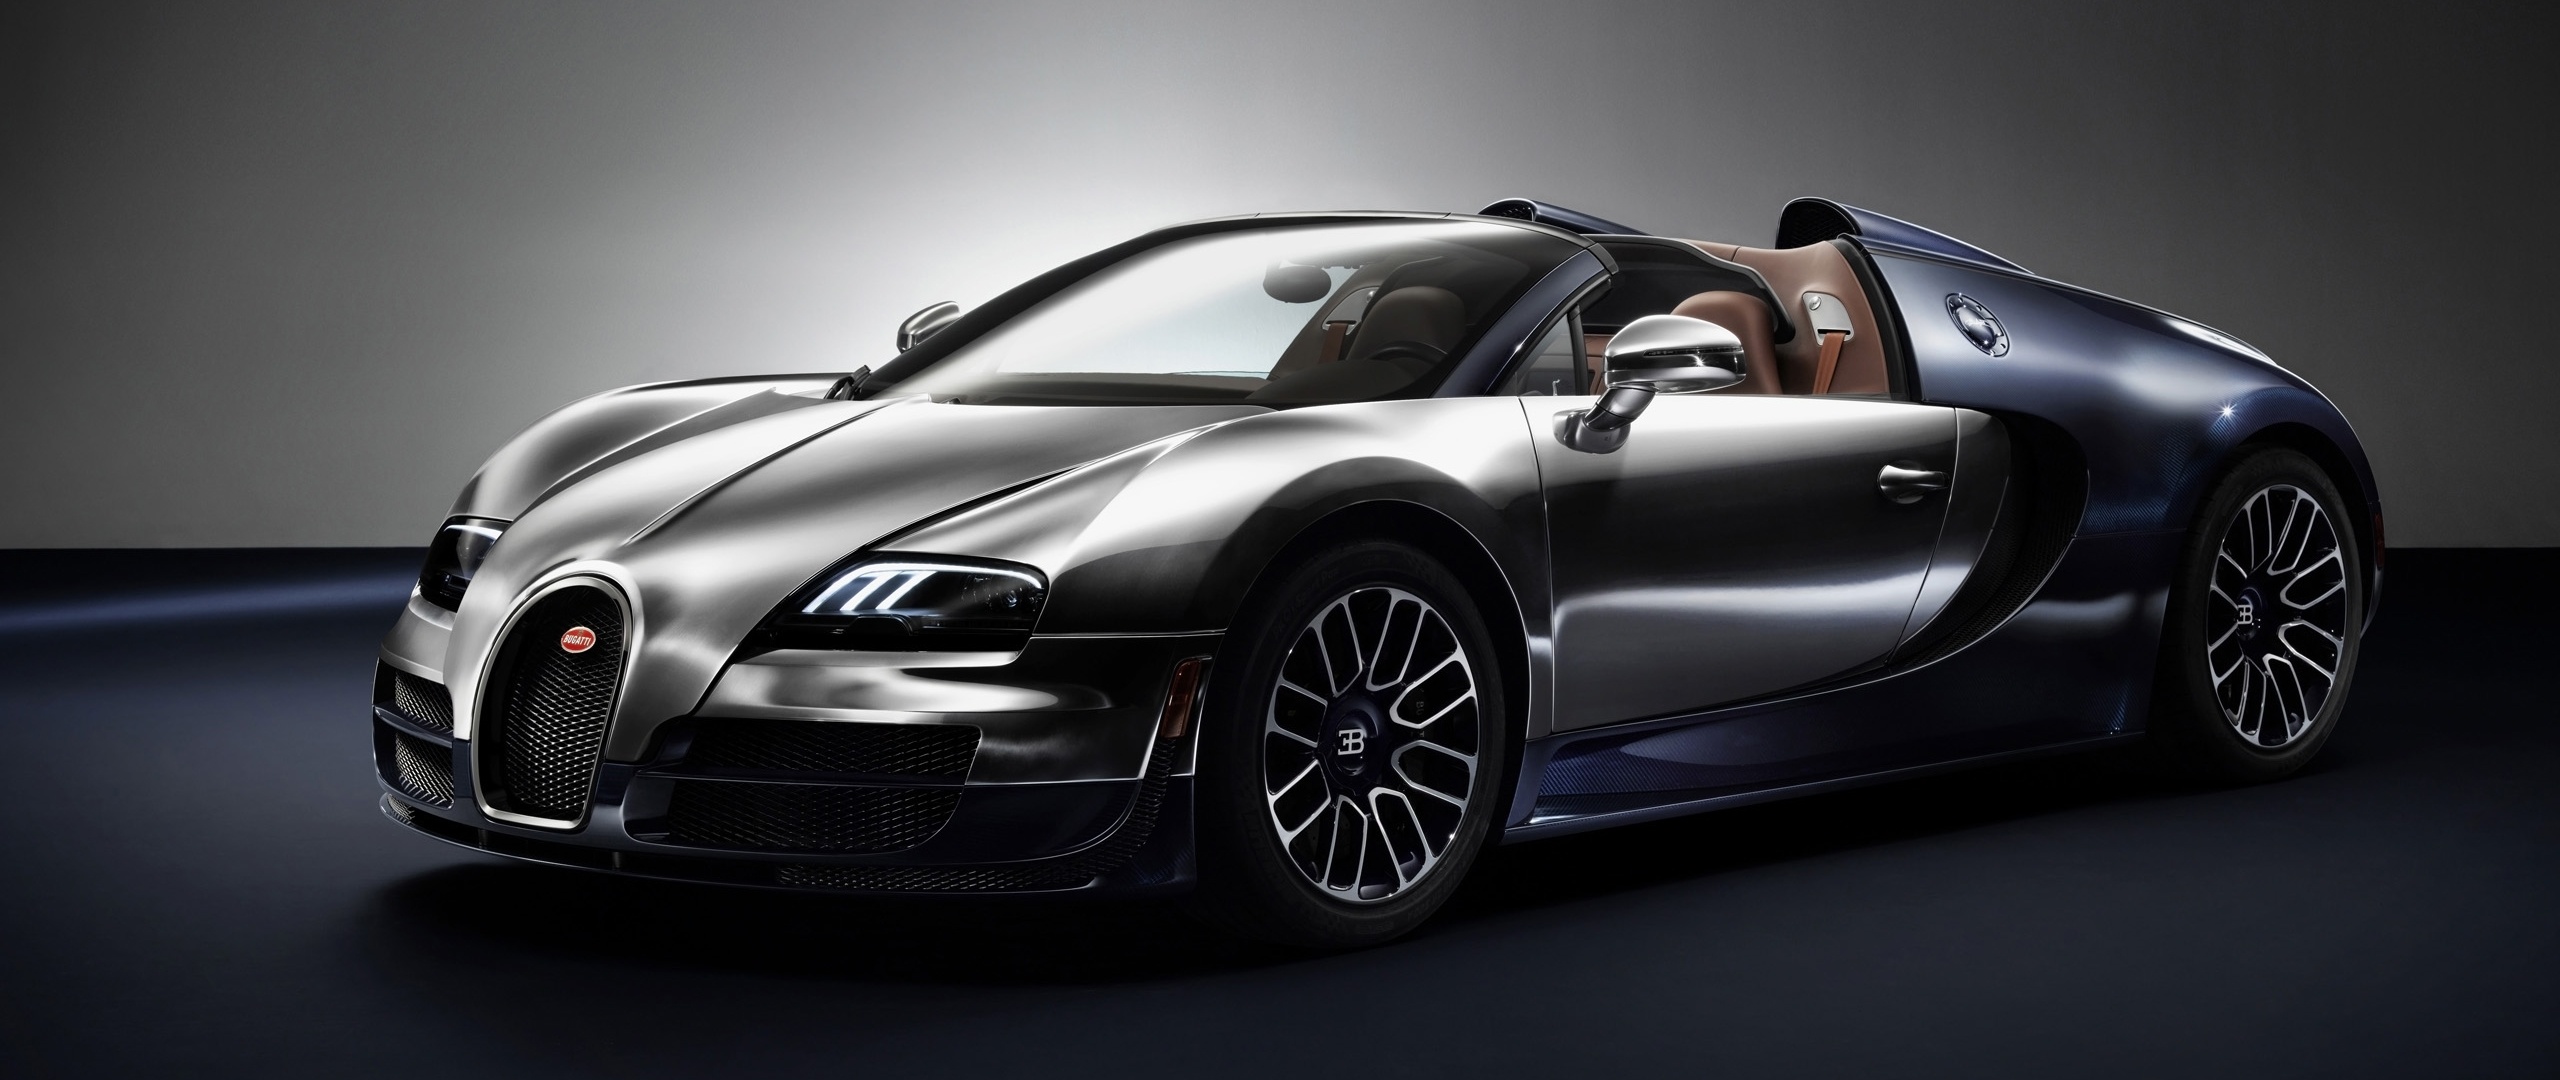 Bugatti Veyron, Ettore Bugatti Legend Edition, Striking wallpaper, Legendary car, 2560x1080 Dual Screen Desktop